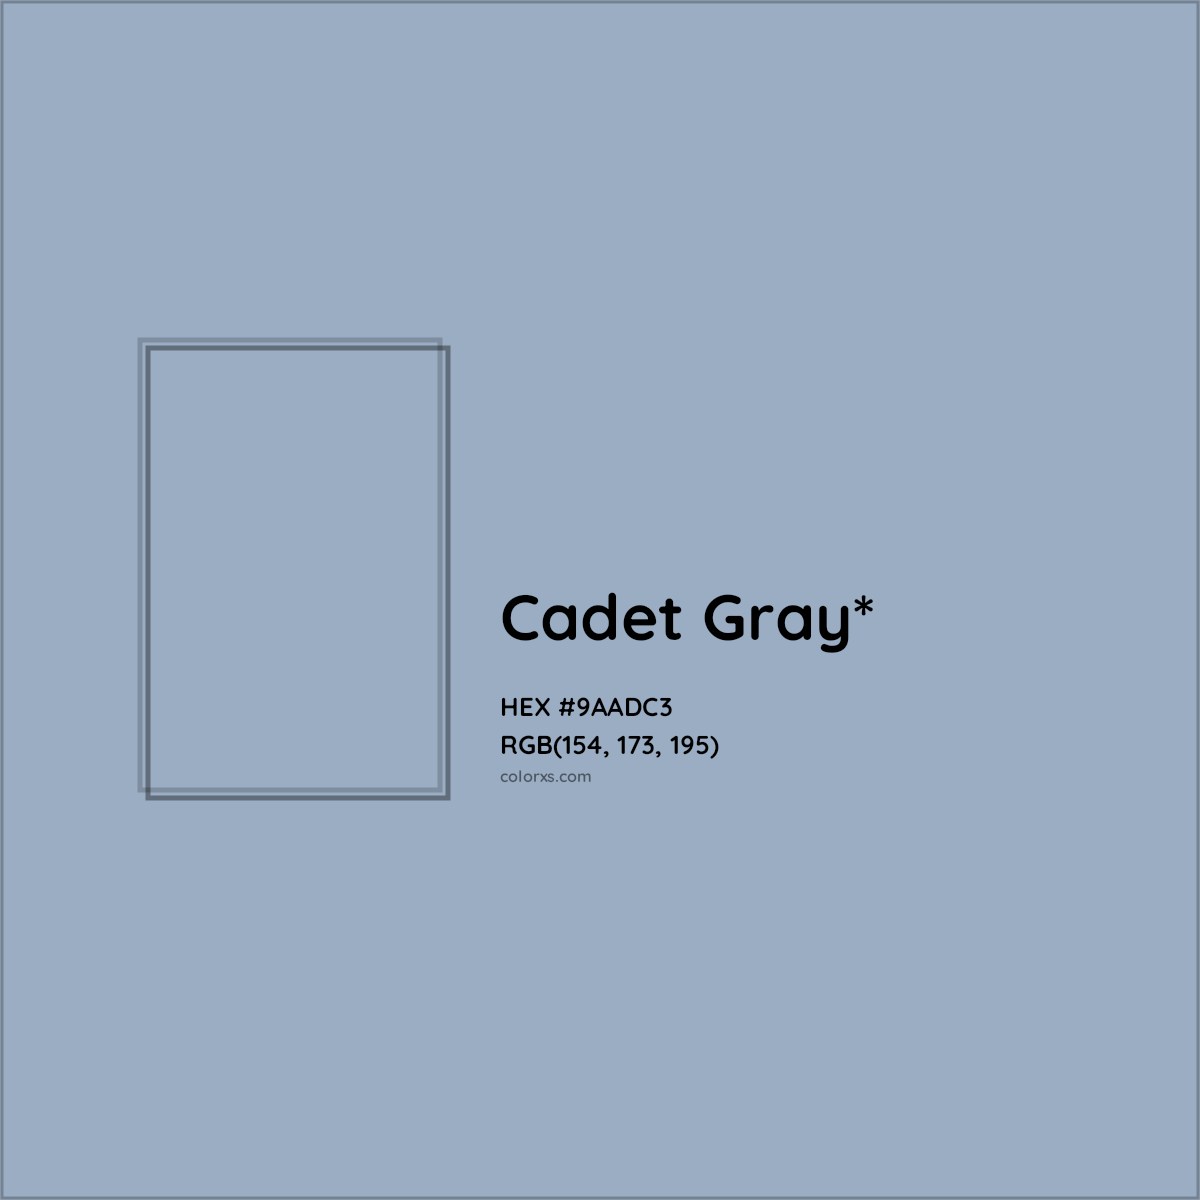 HEX #9AADC3 Color Name, Color Code, Palettes, Similar Paints, Images